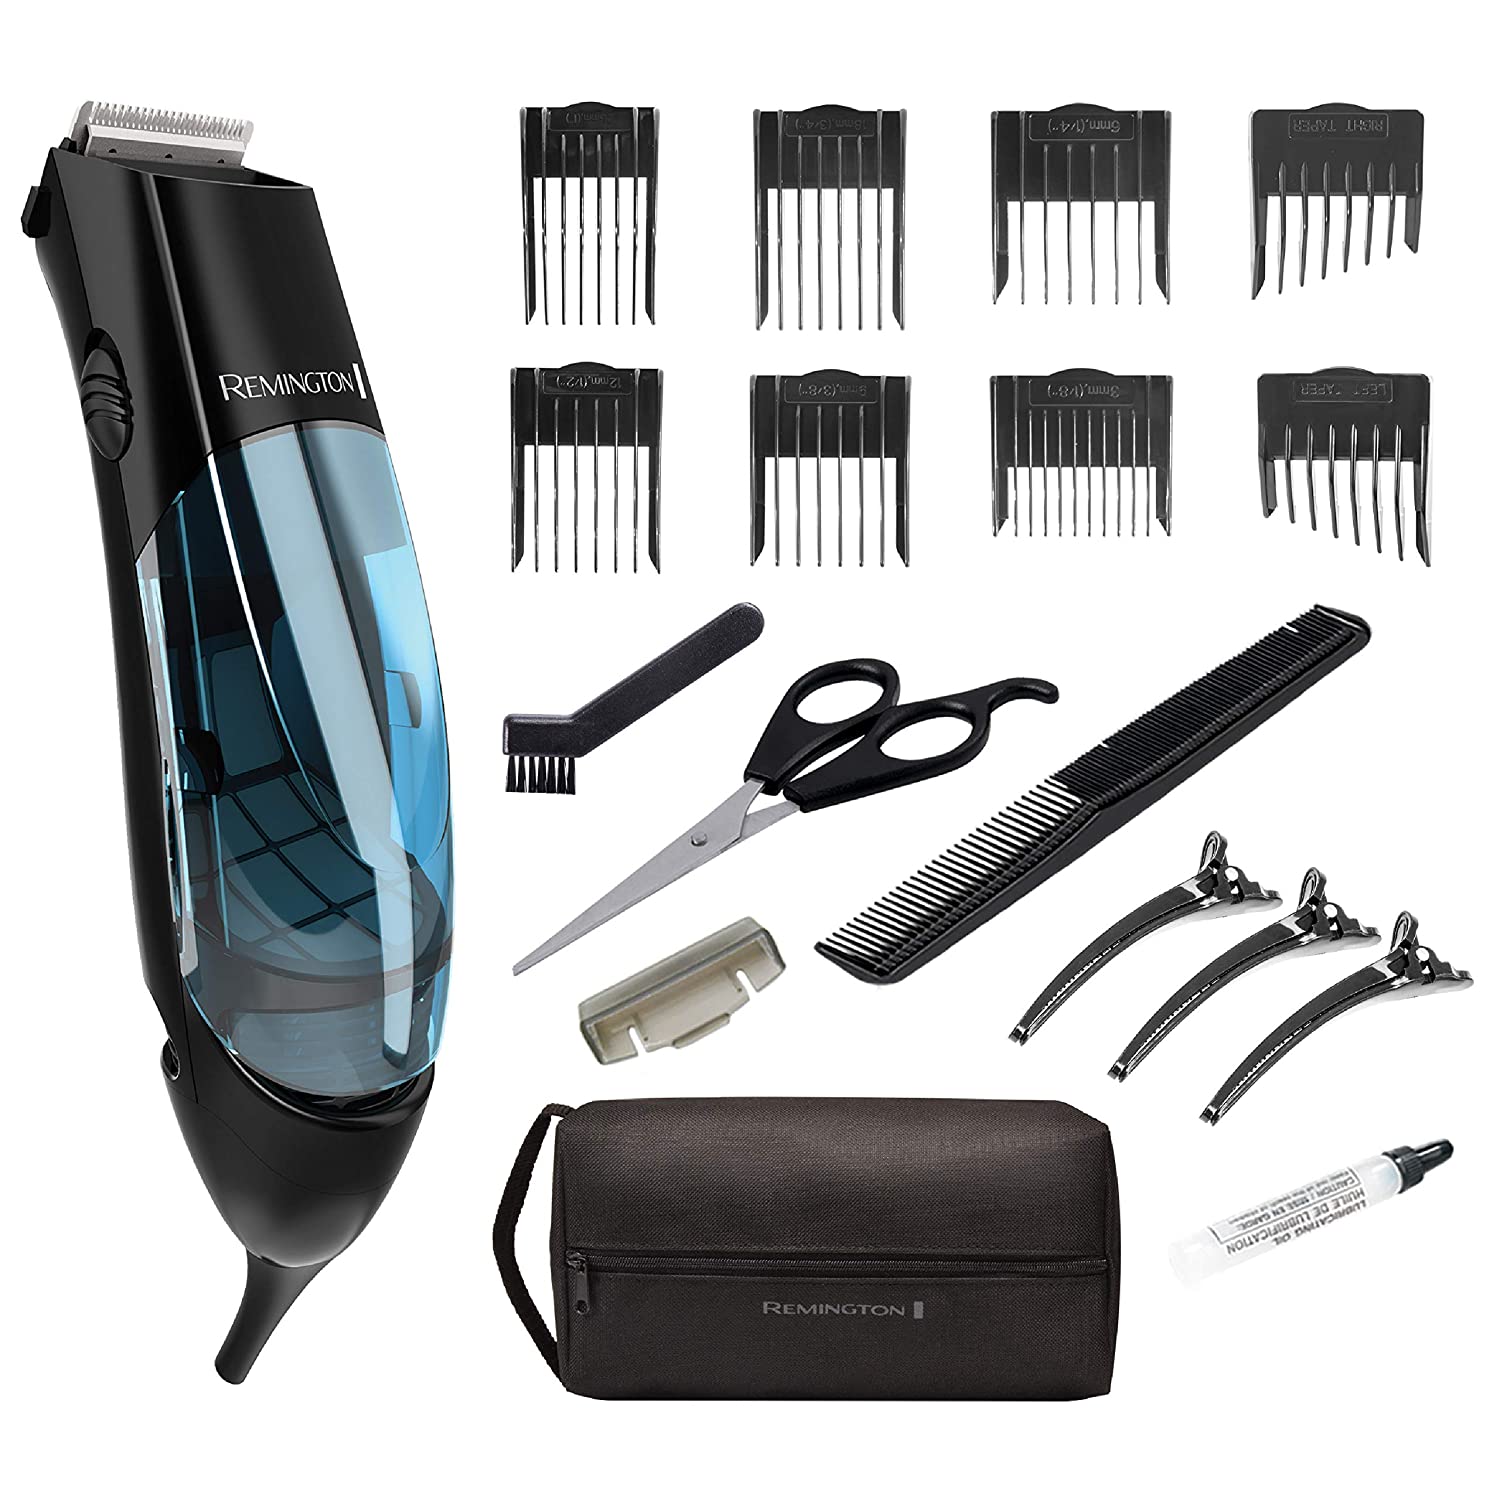 Remington HKVAC2000A Vacuum Haircut Kit, Vacuum Beard Trimmer, Hair Clippers for Men (18 pieces) for $32.49 + FSSS